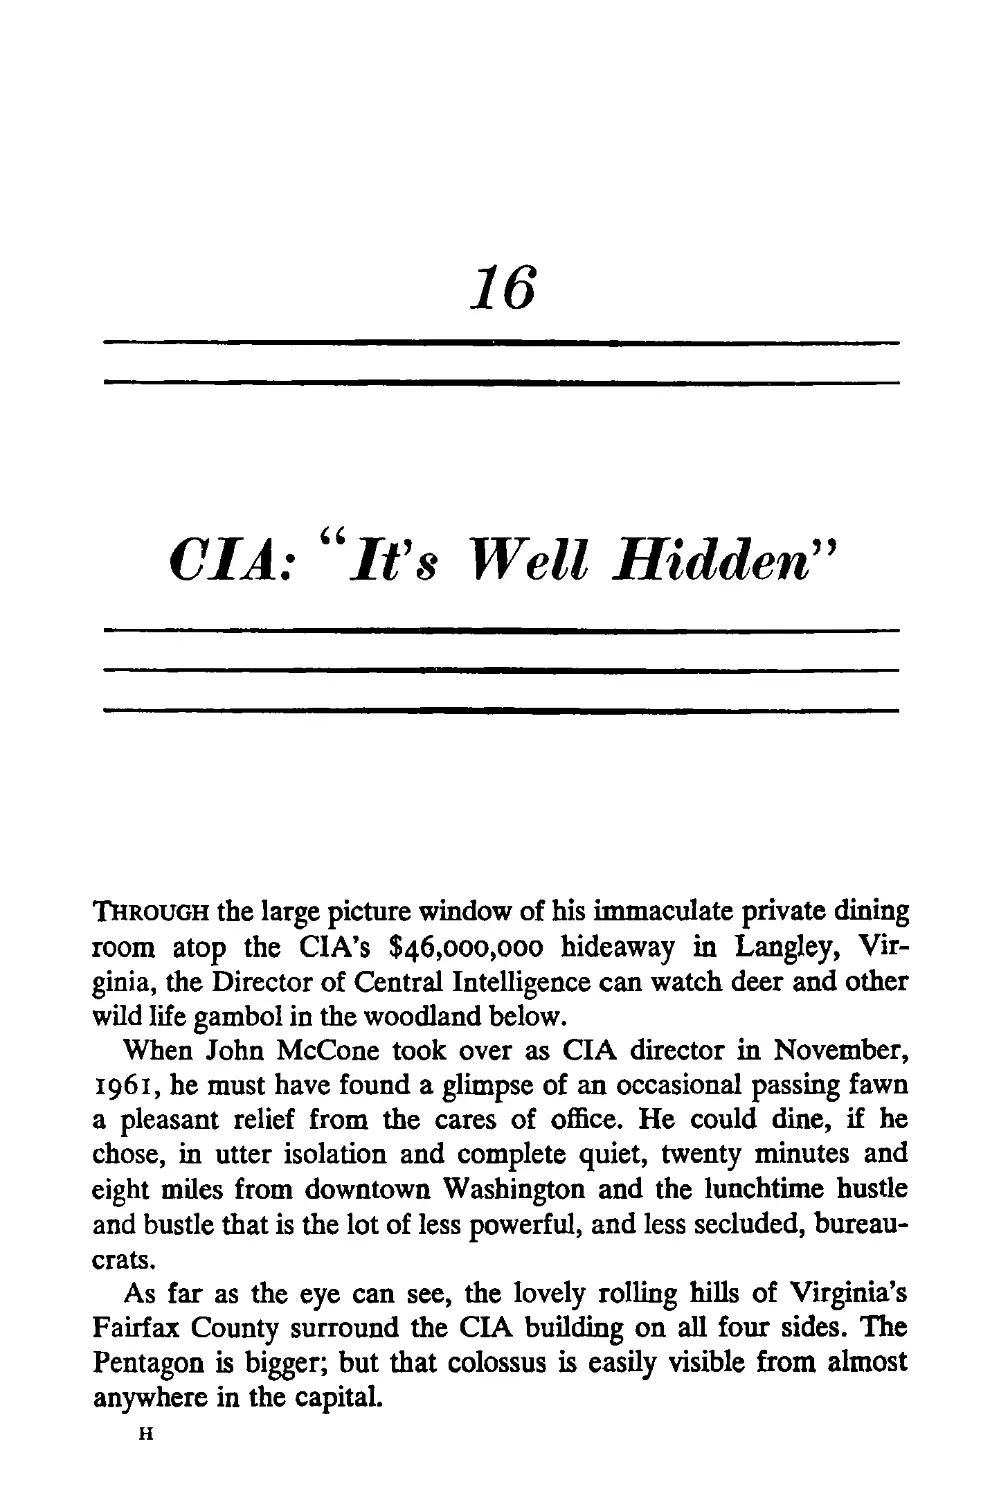 16. CIA: “It’s Well Hidden”